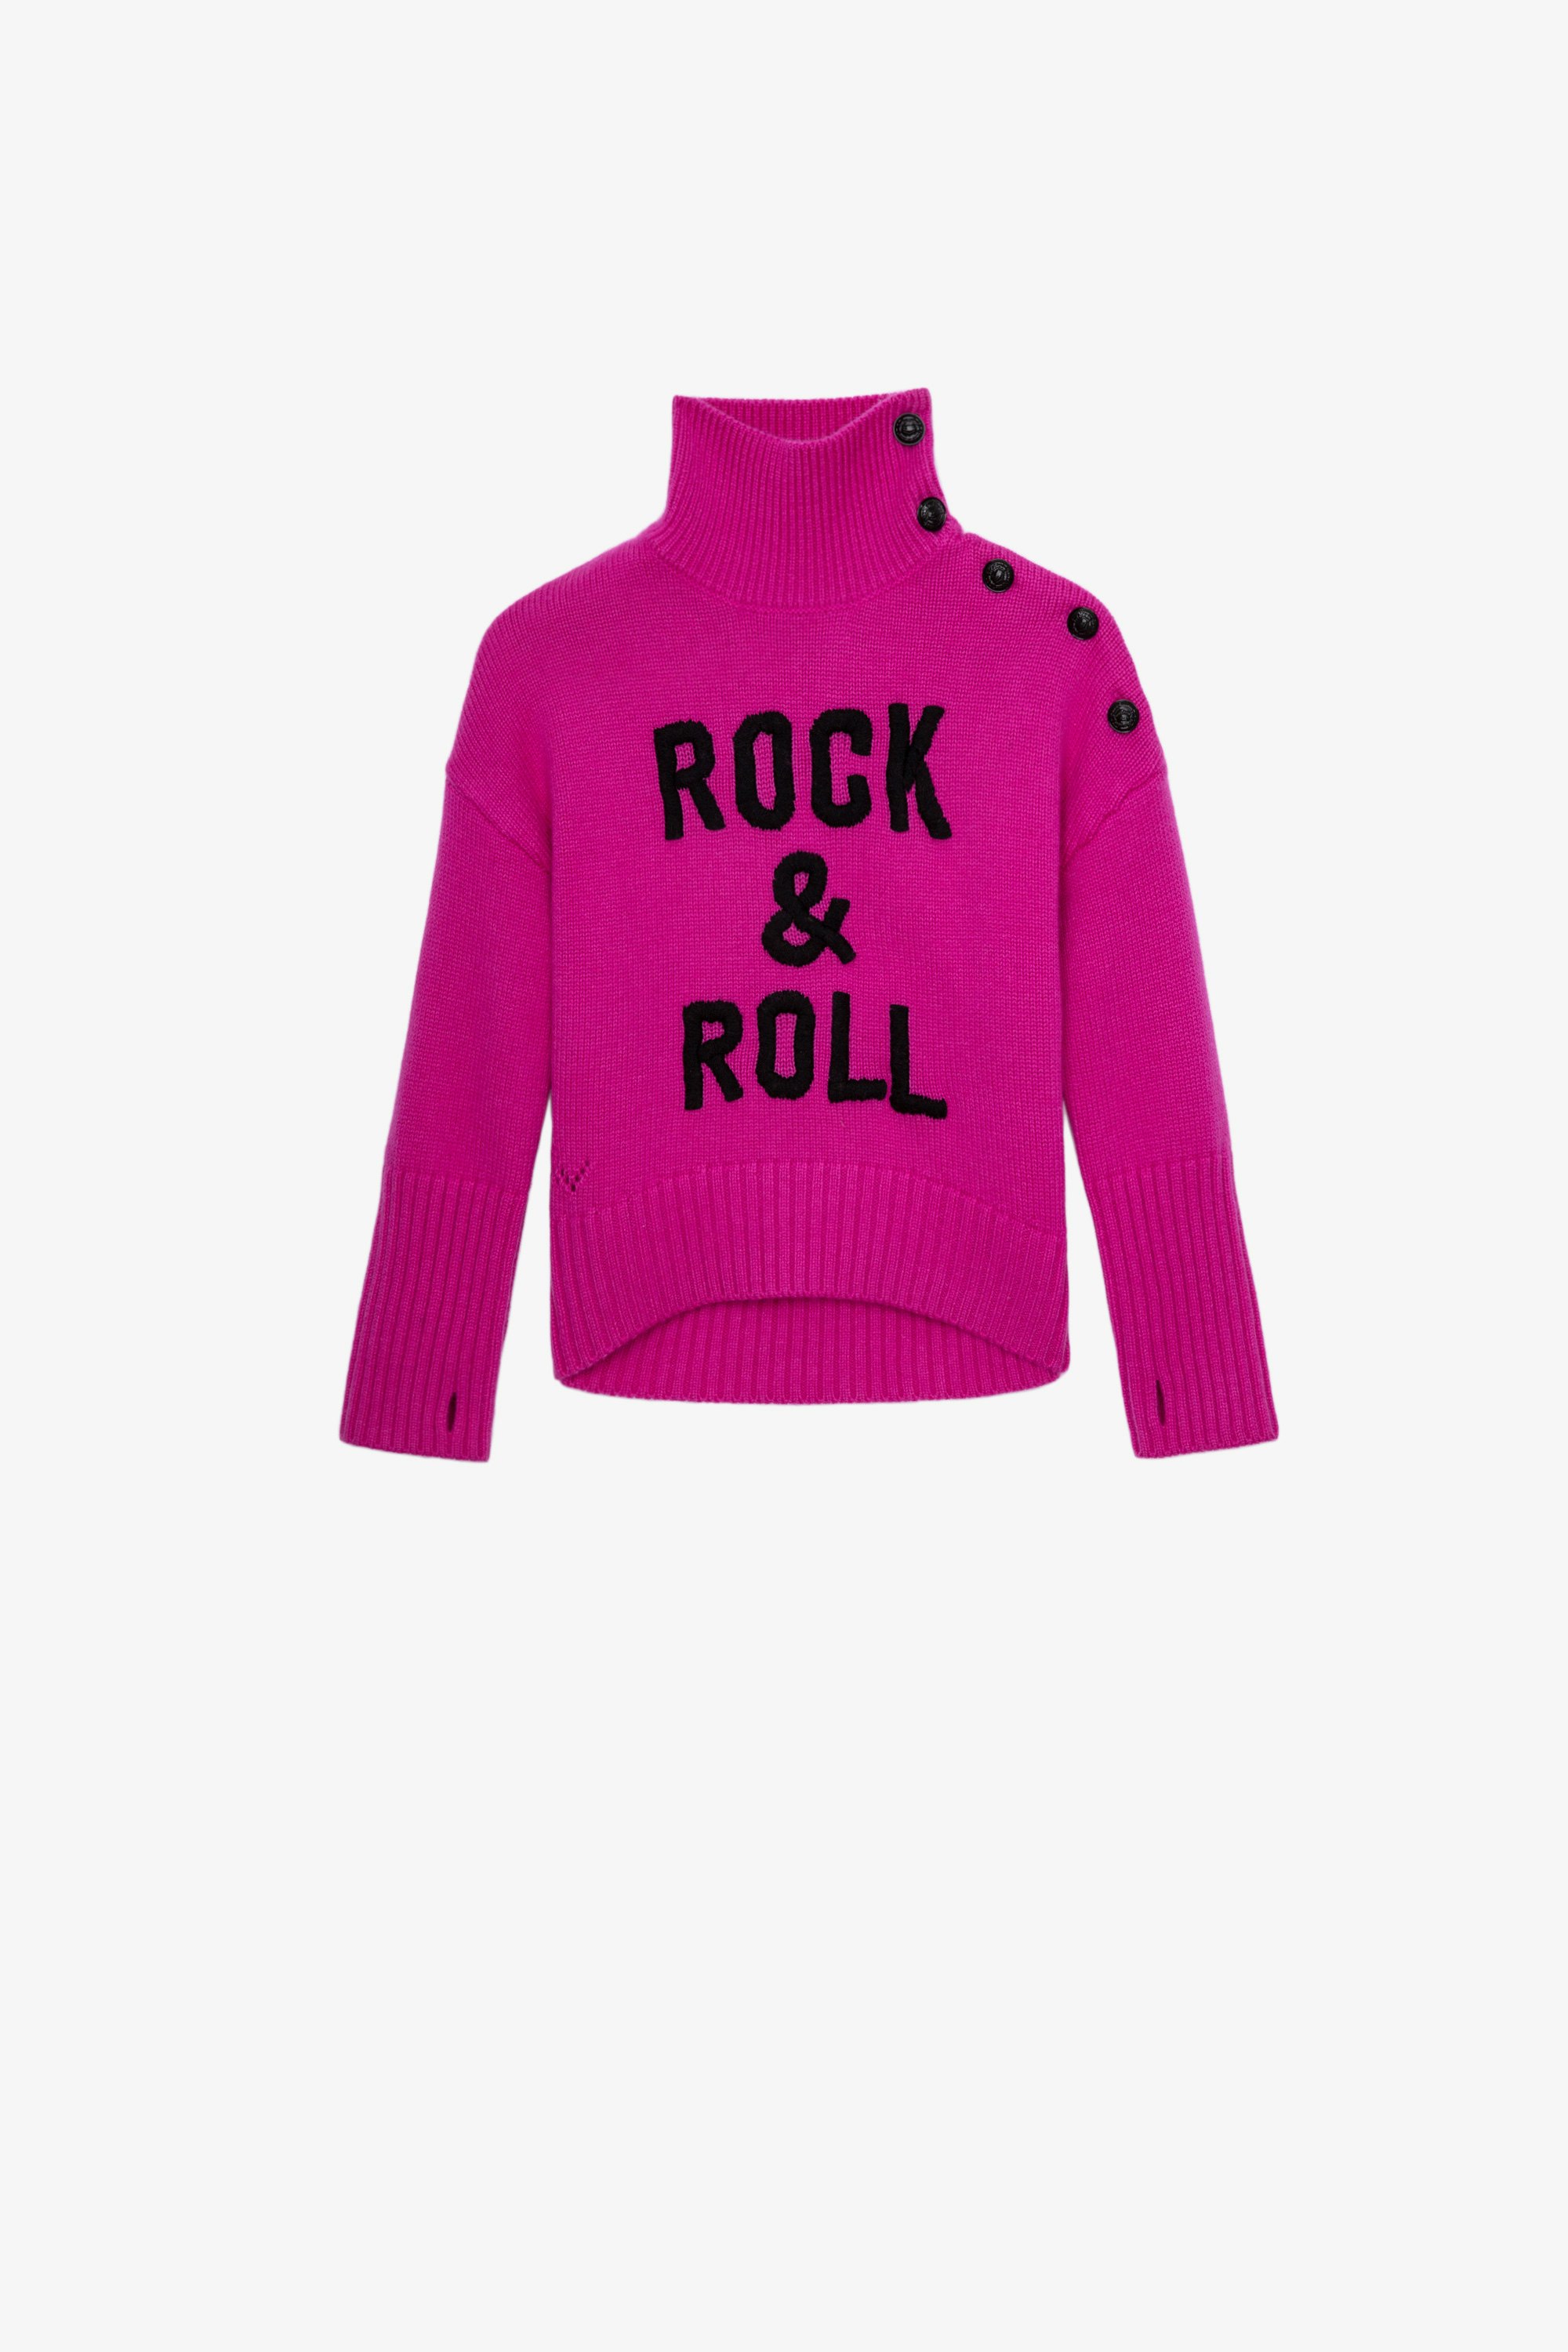 Alma Children’s ニット Children’s pink long-sleeve turtleneck jumper with “Rock & Roll” message and buttons on shoulder 